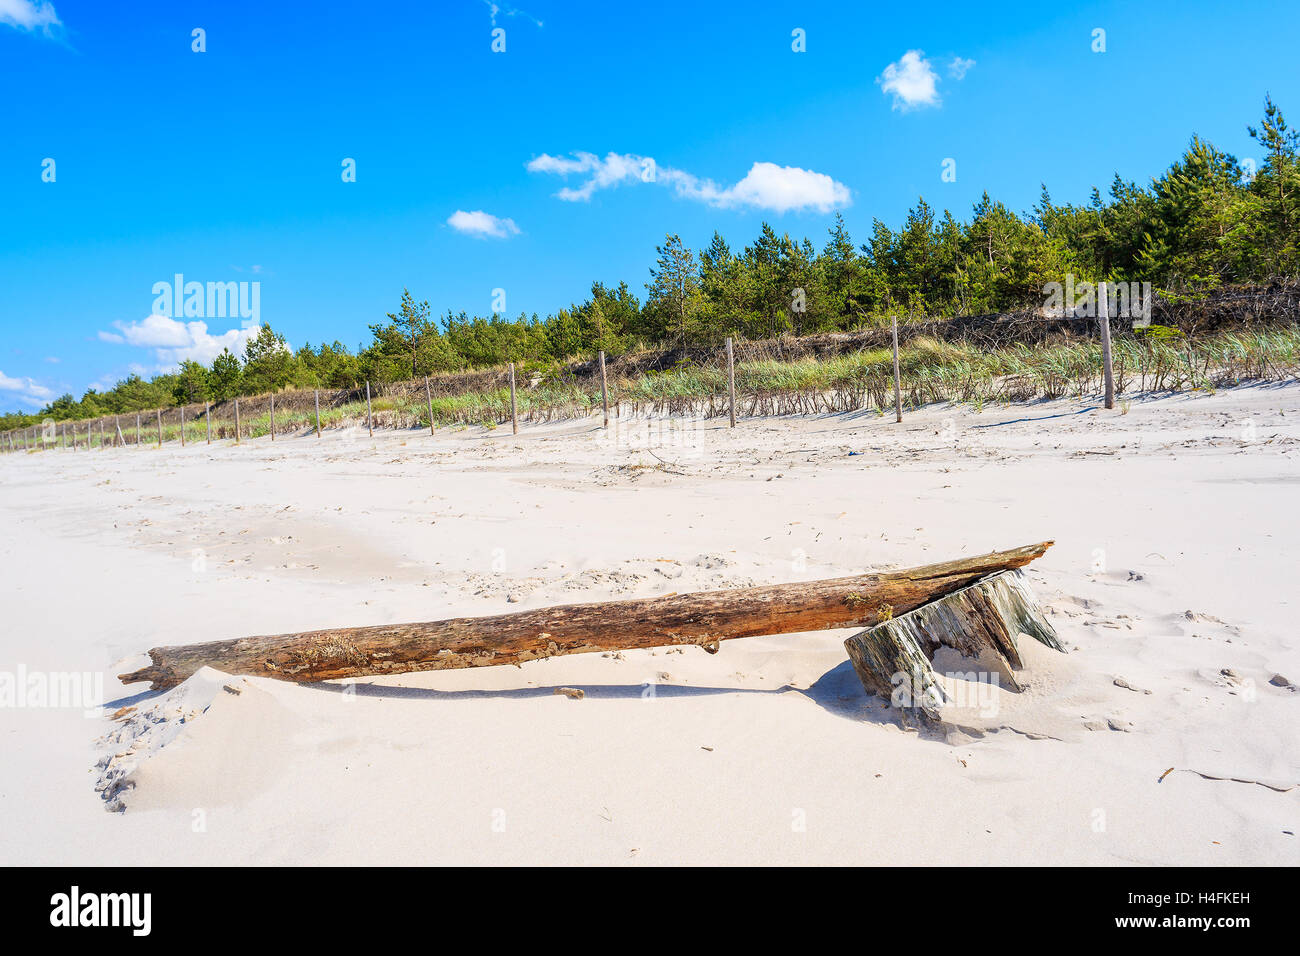 Dry tree trunk on sand at Debki beach, Baltic Sea, Poland Stock Photo